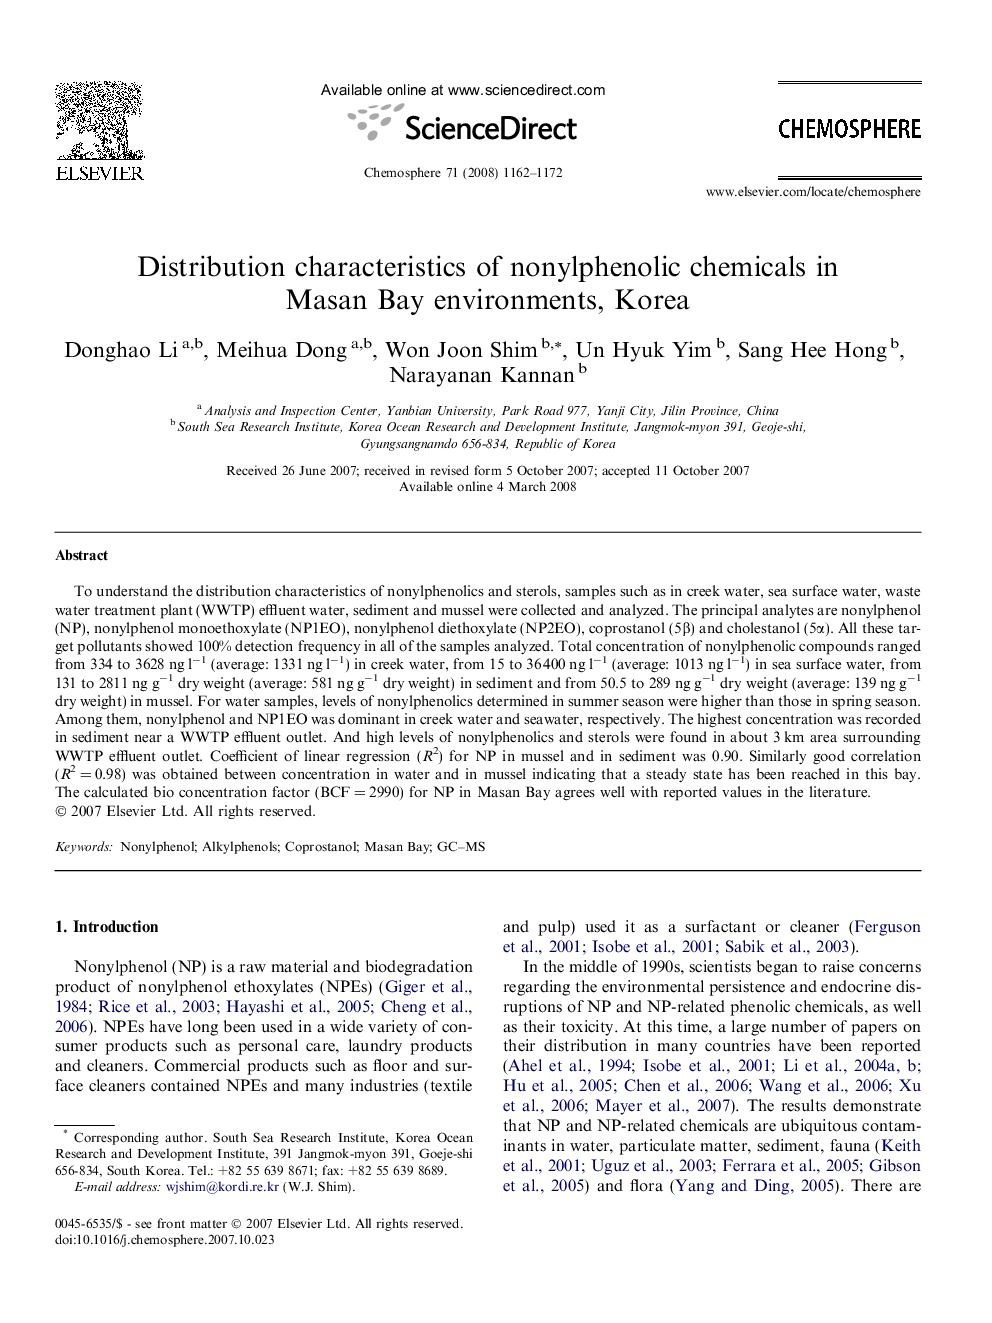 Distribution characteristics of nonylphenolic chemicals in Masan Bay environments, Korea